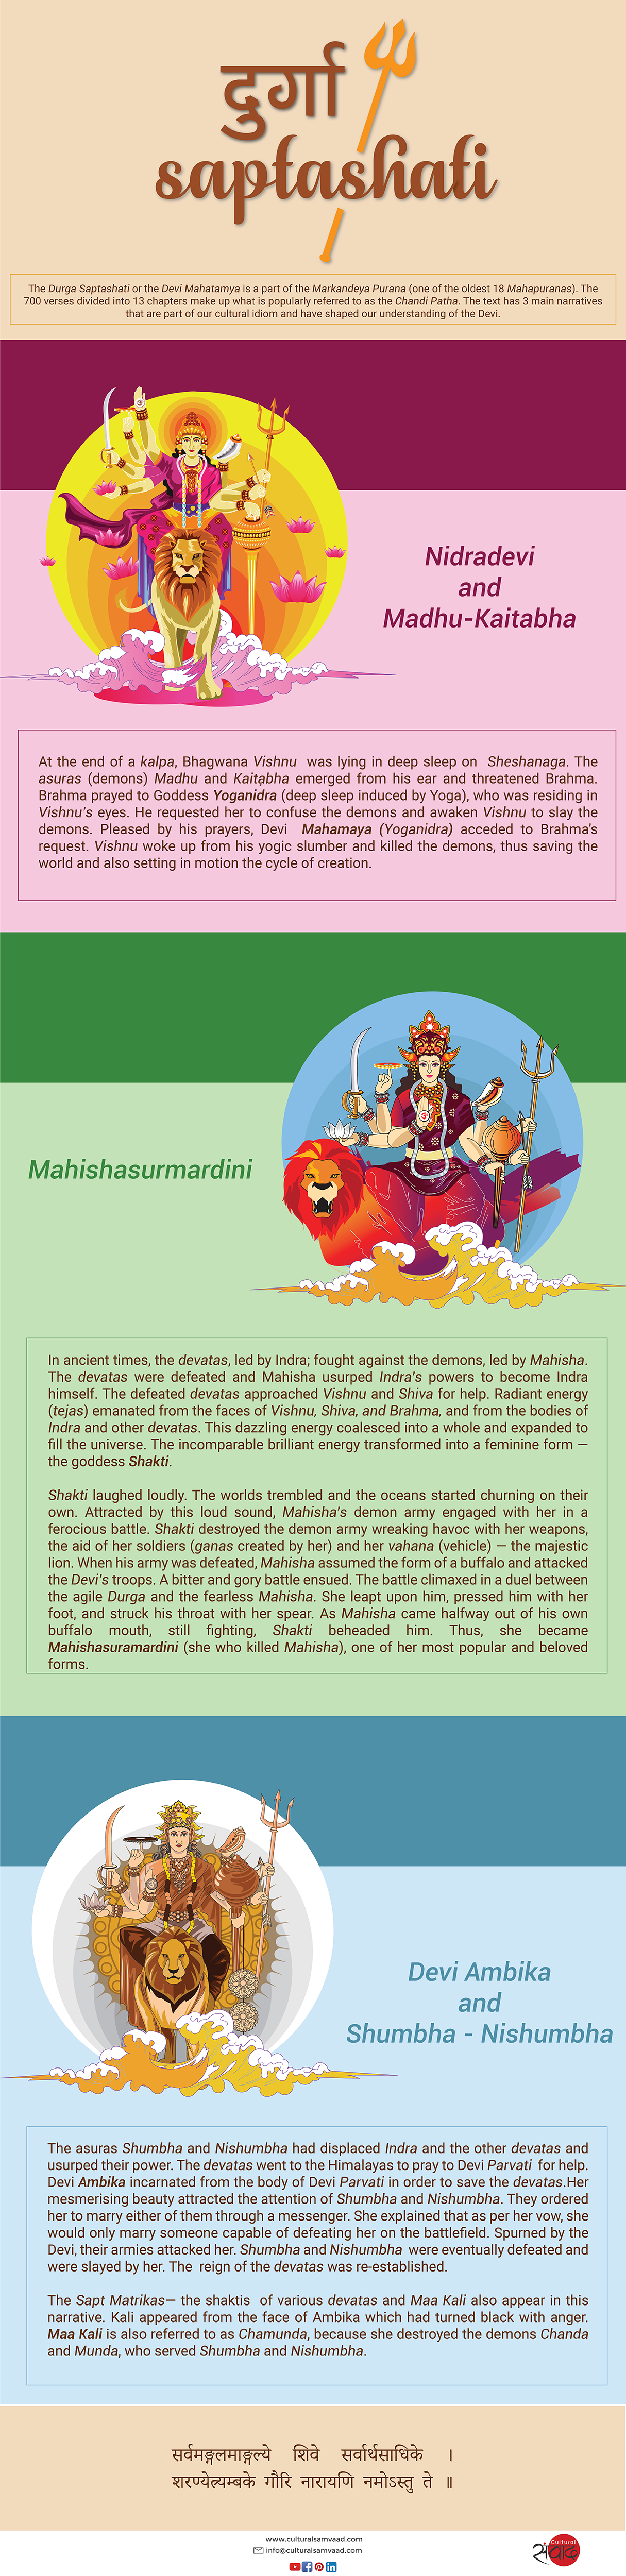 Durga Saptashati Infographic